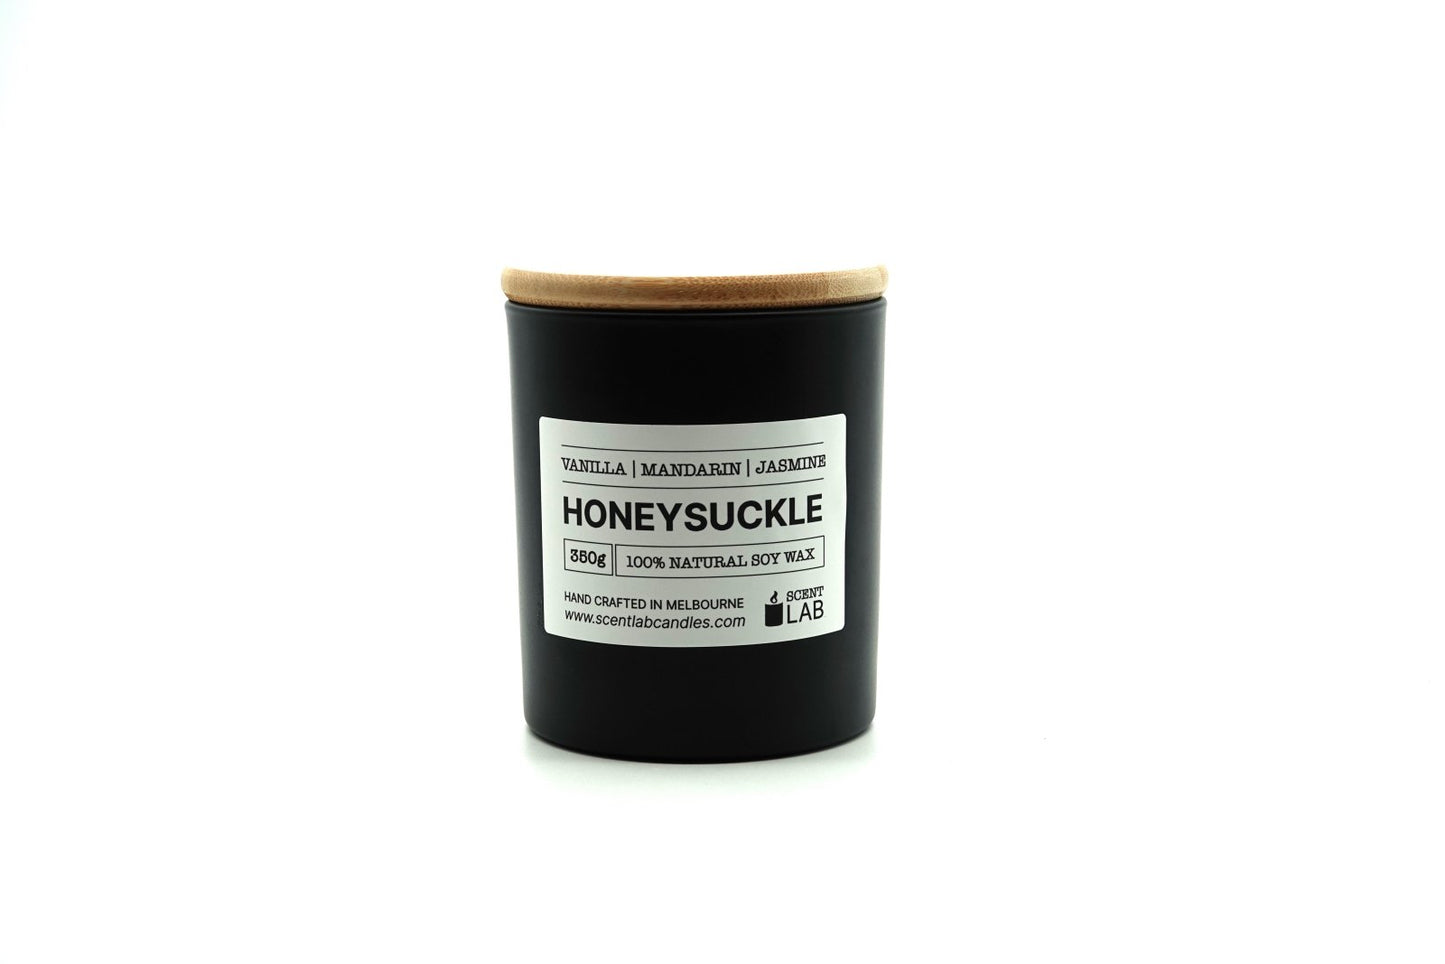 Scent Lab Candles Honeysuckle - Twenty-39